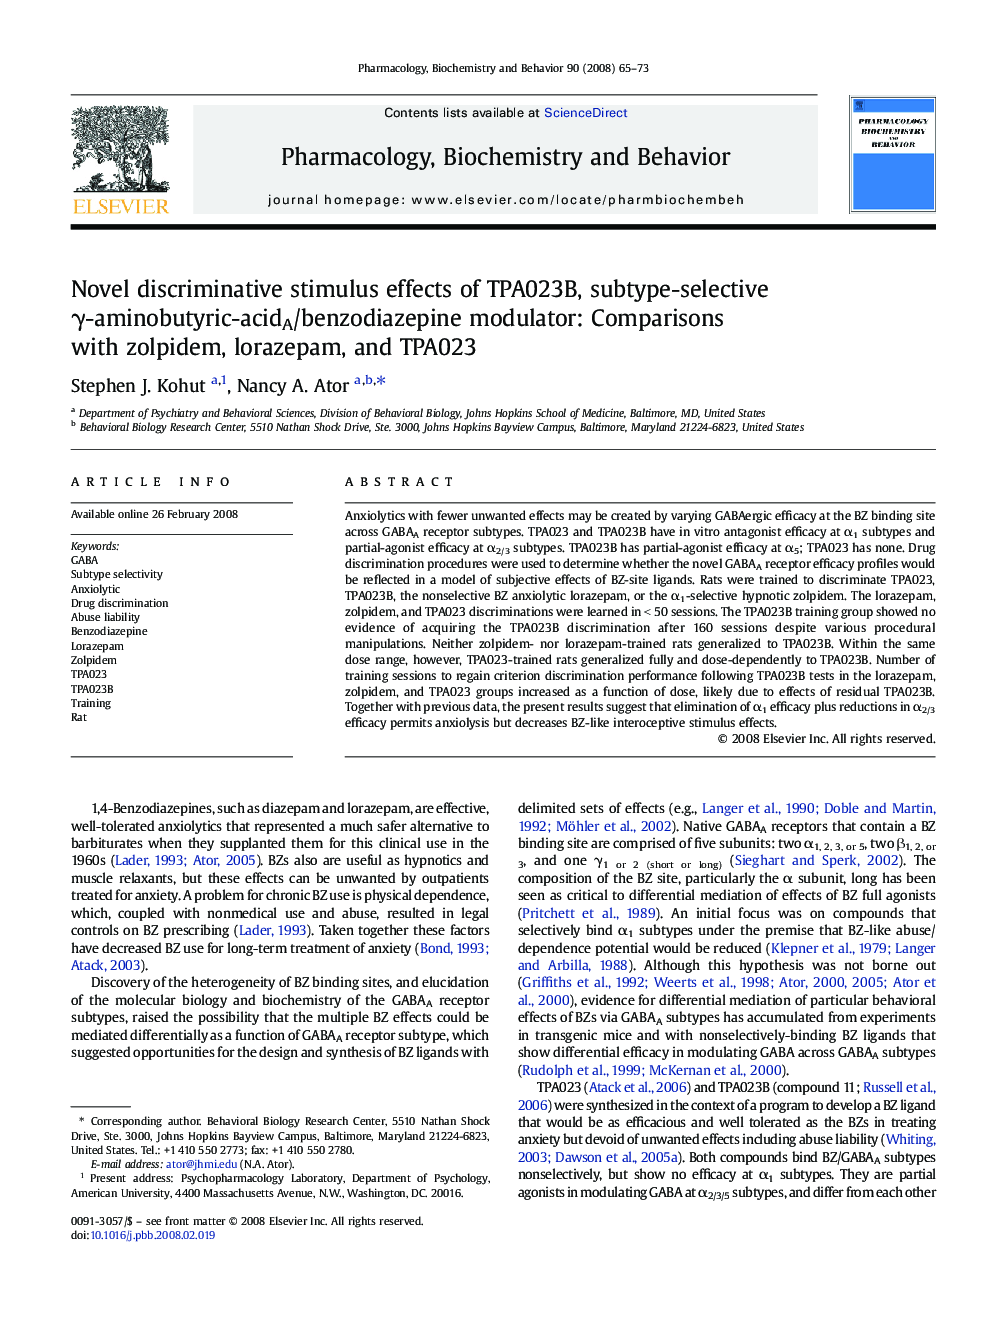 Novel discriminative stimulus effects of TPA023B, subtype-selective Î³-aminobutyric-acidA/benzodiazepine modulator: Comparisons with zolpidem, lorazepam, and TPA023